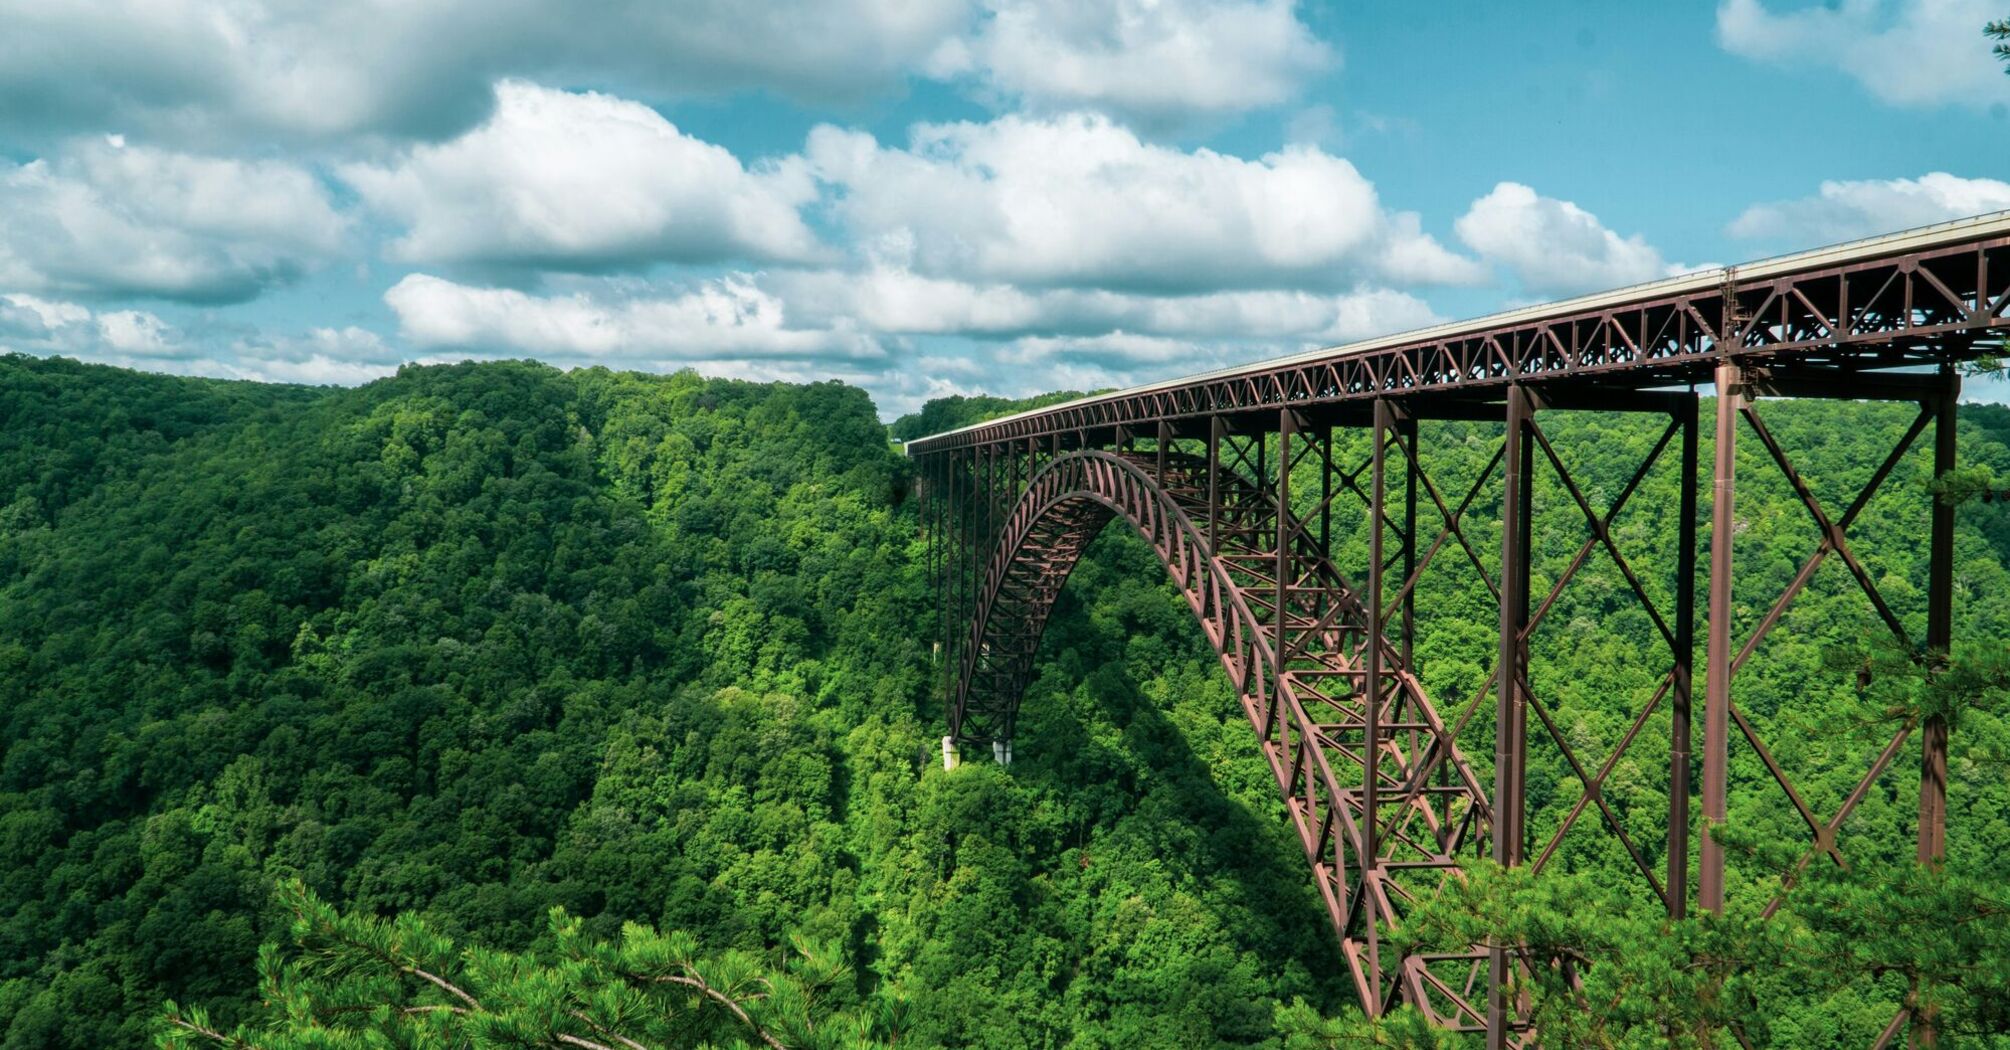 Railway bridge at West Virginia, USA 